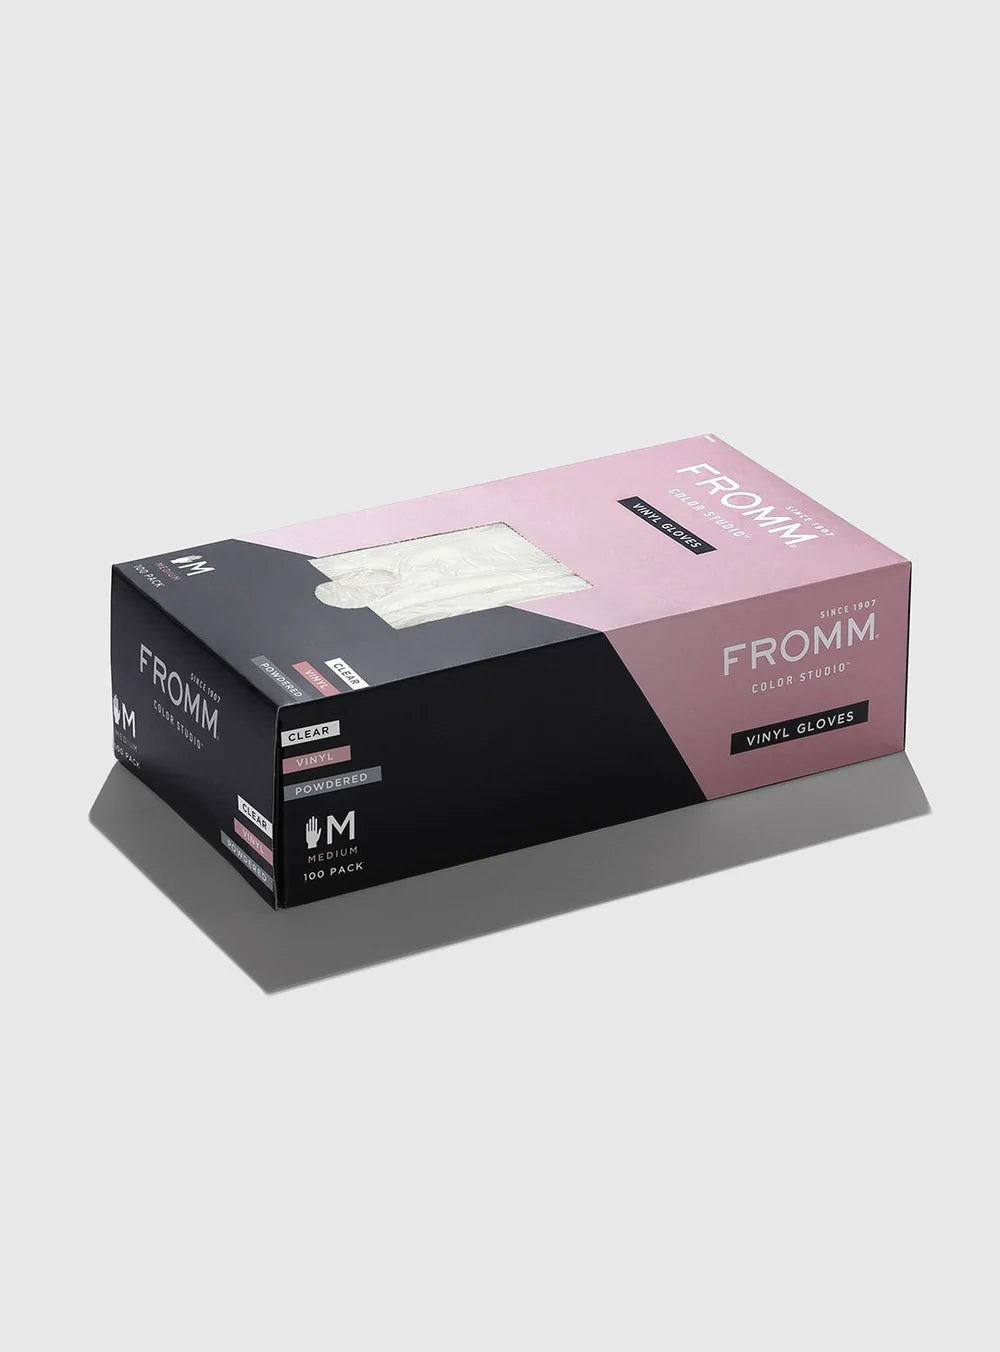 Fromm Medium Clear Vinyl Gloves Powdered, 100 Pack